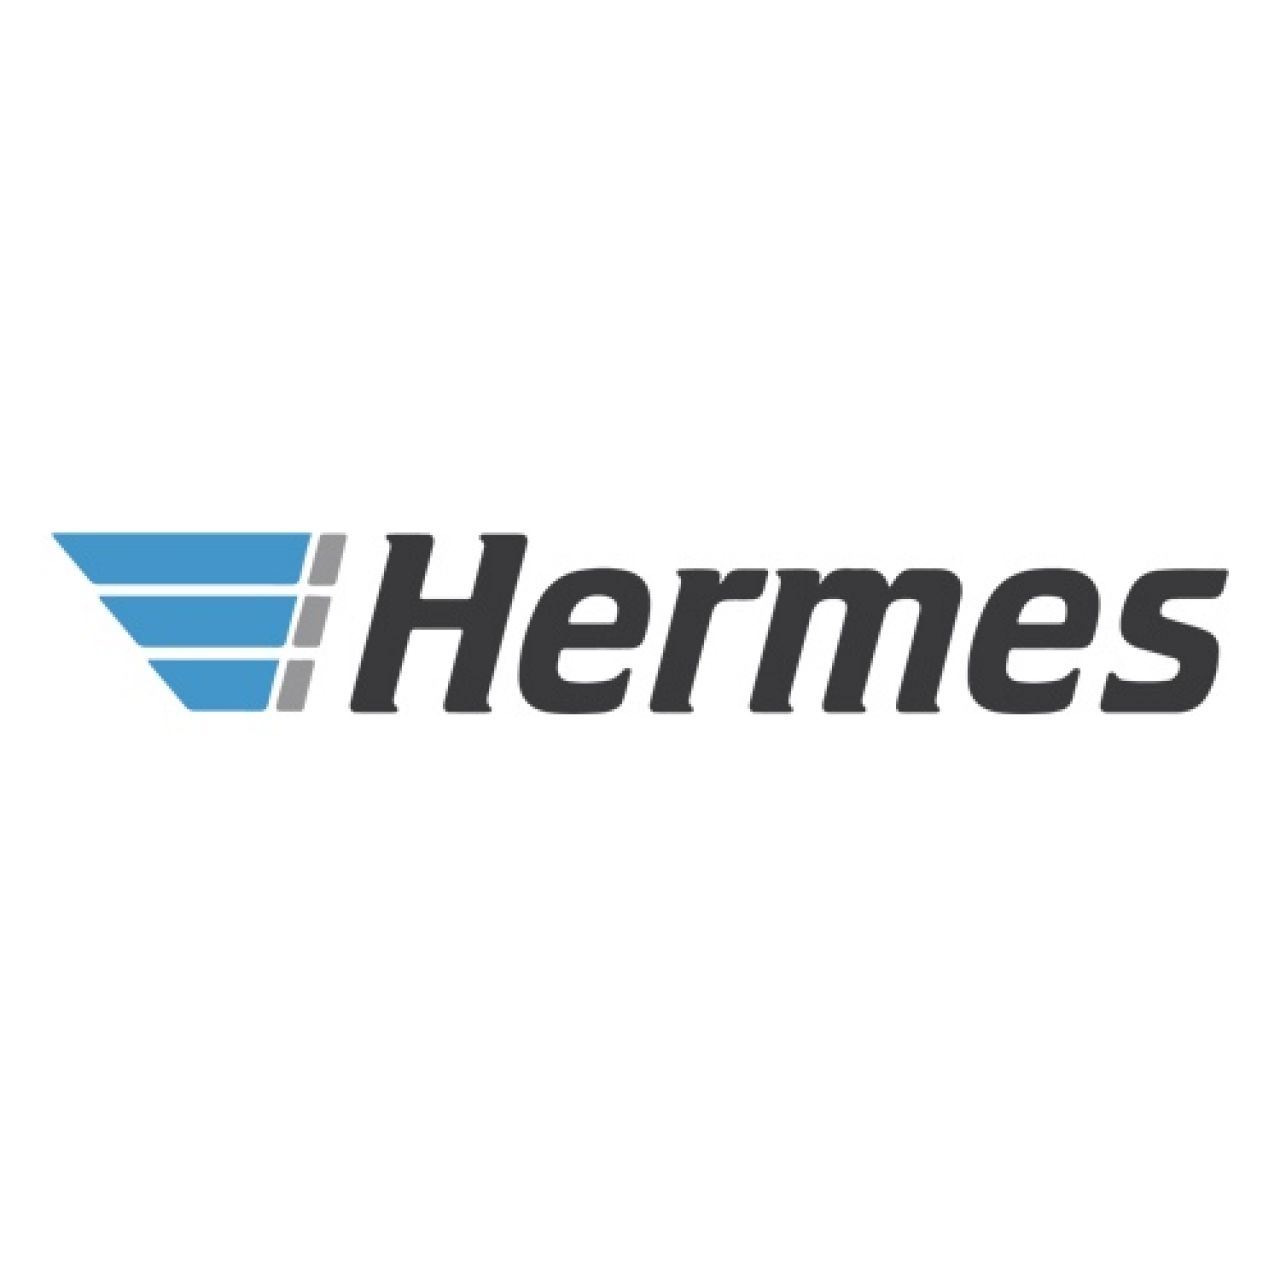 Hermes [доставка] из категории Доставка для CMS OpenCart (ОпенКарт)